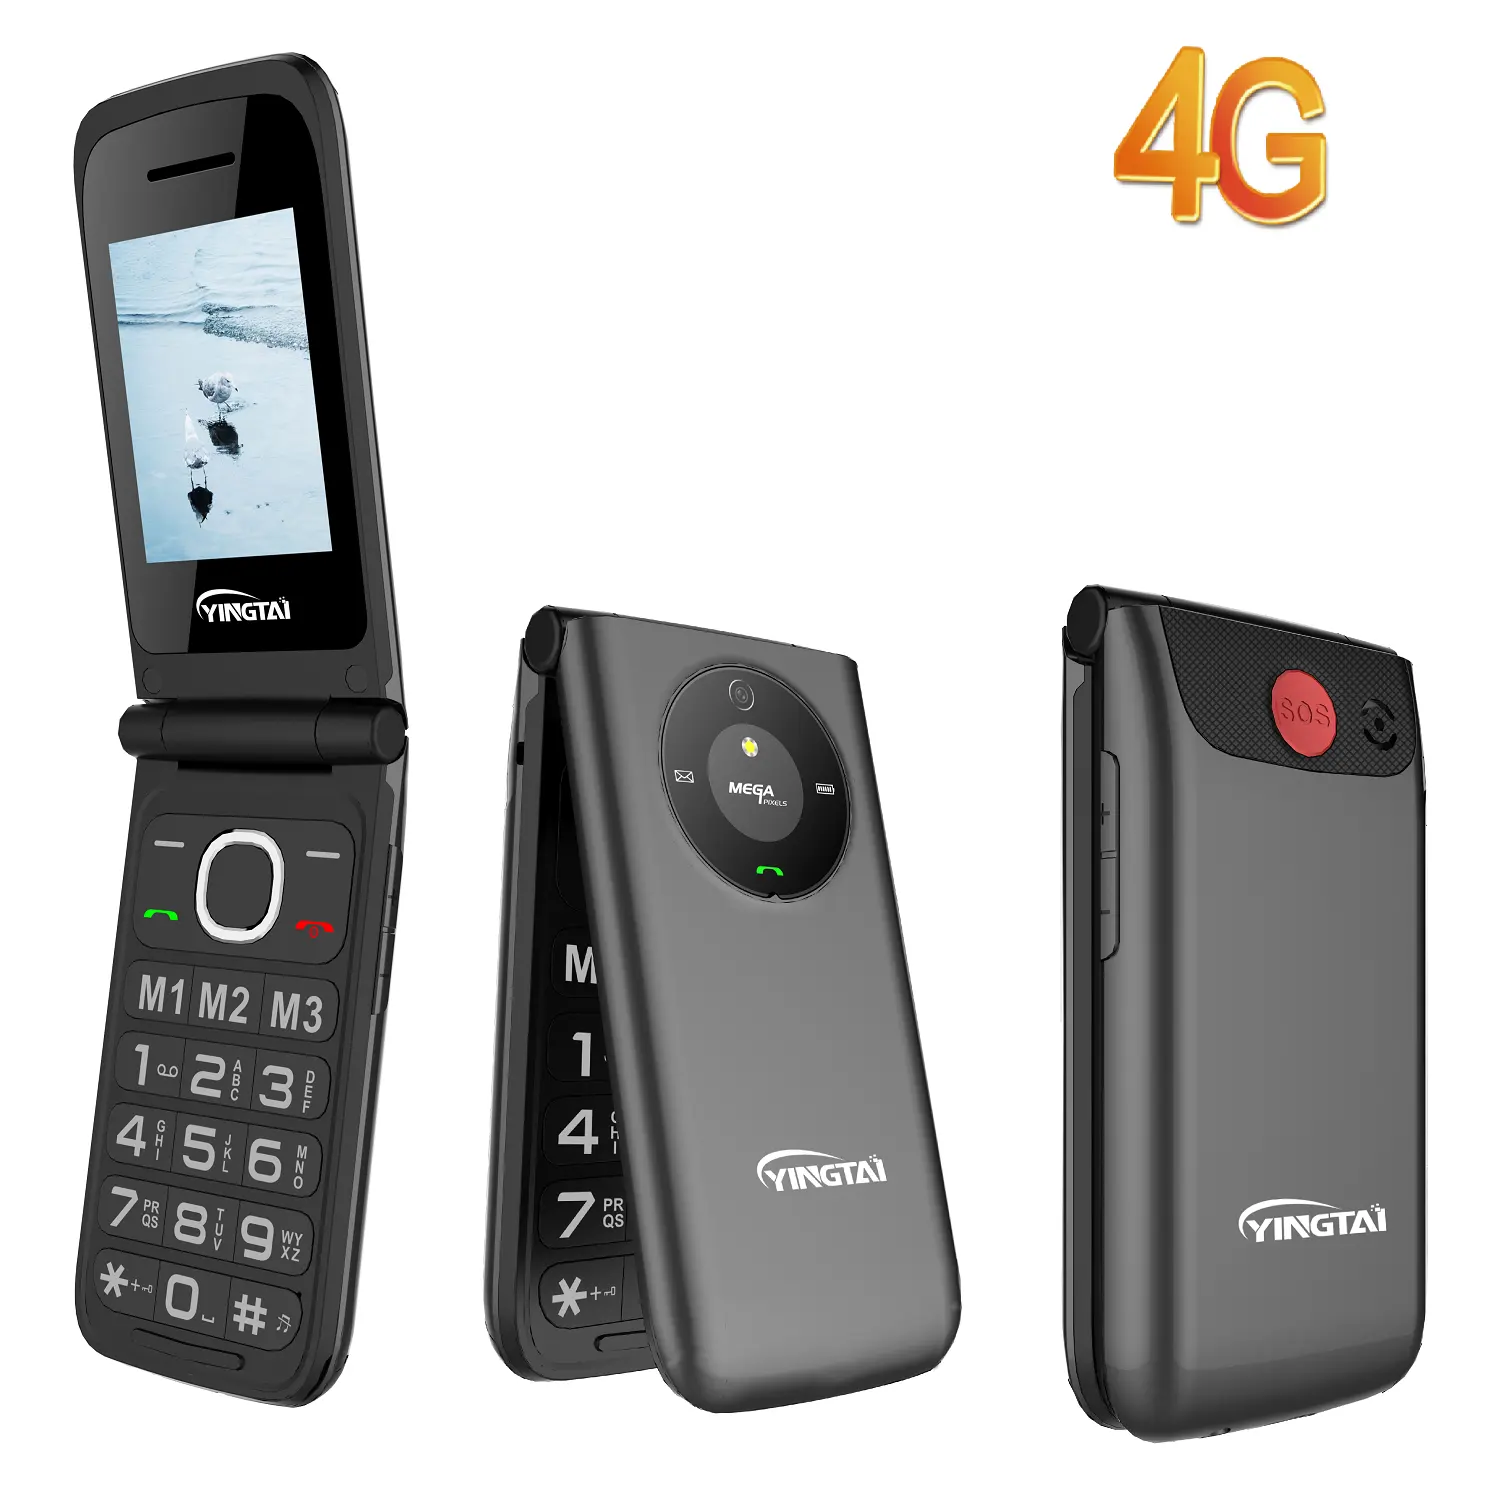 4G 2.4นิ้วขนาดเล็กปุ่มใหญ่เสียงสูงซิมคู่อาวุโสผู้สูงอายุโทรศัพท์มือถือพลิกโทรศัพท์พื้นฐาน